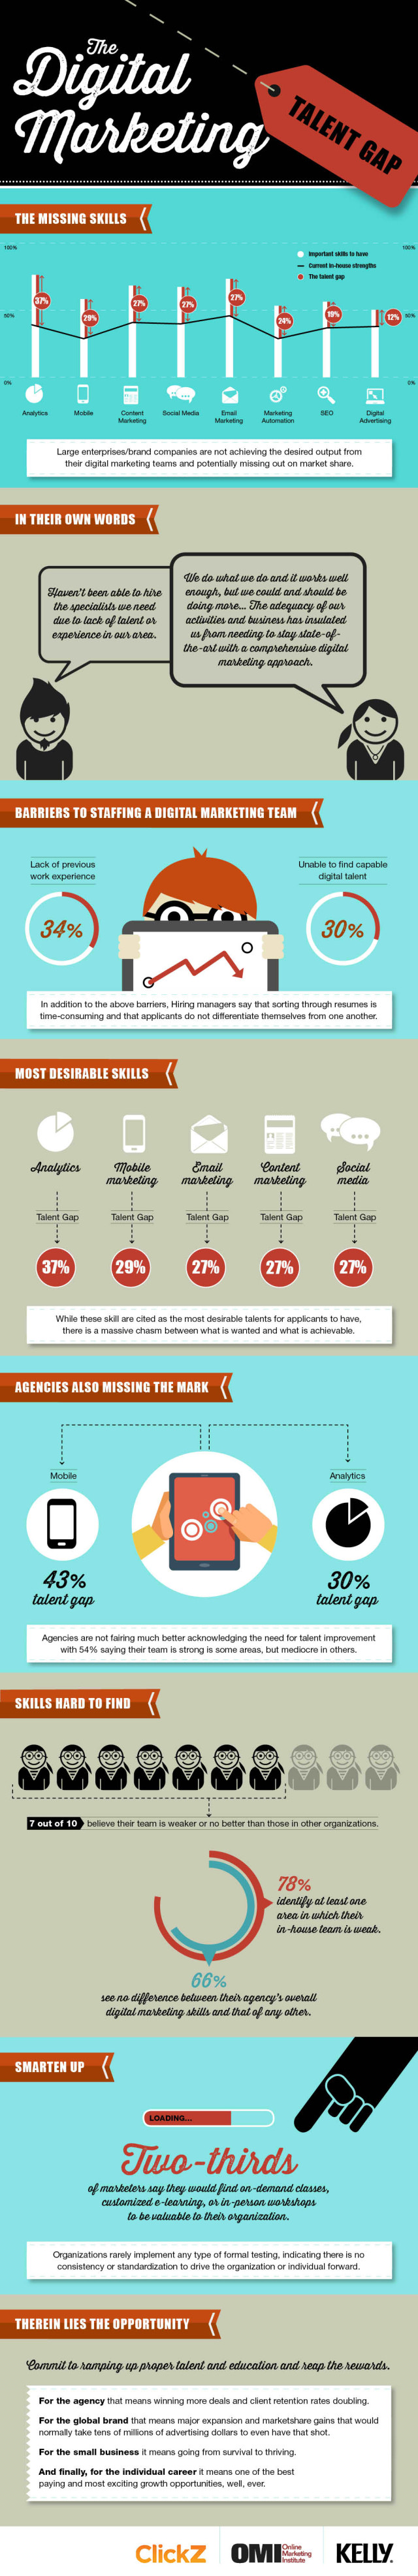 digital_marketing_infographic